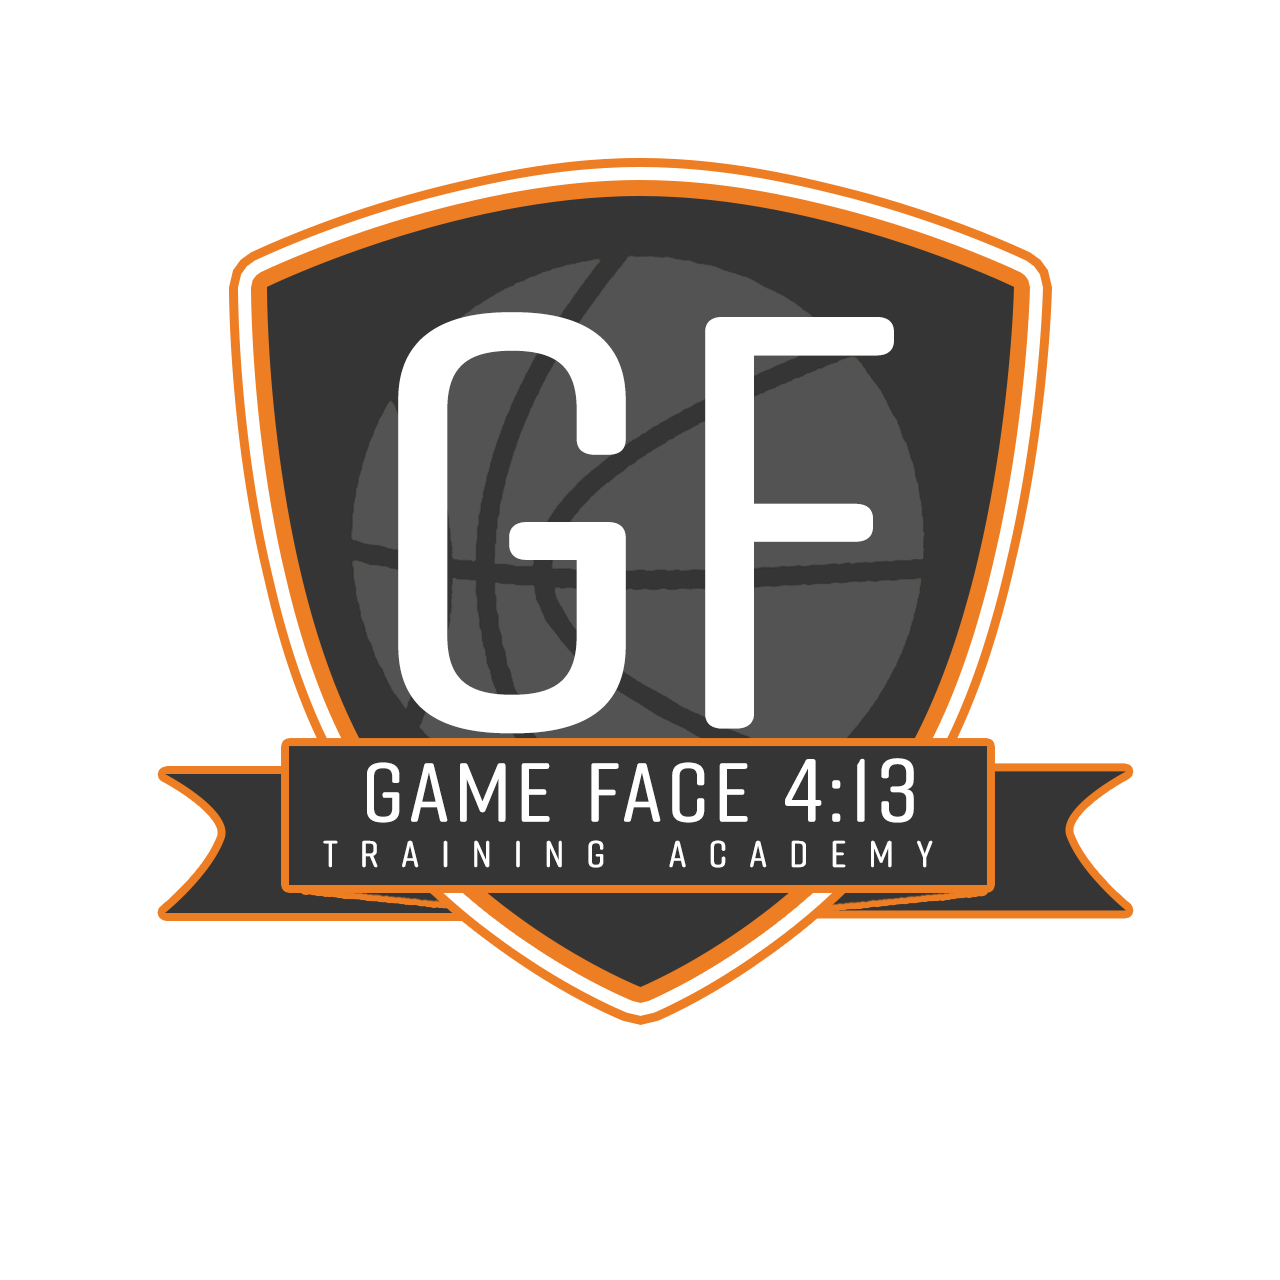 Gameface413 Training Academy logo